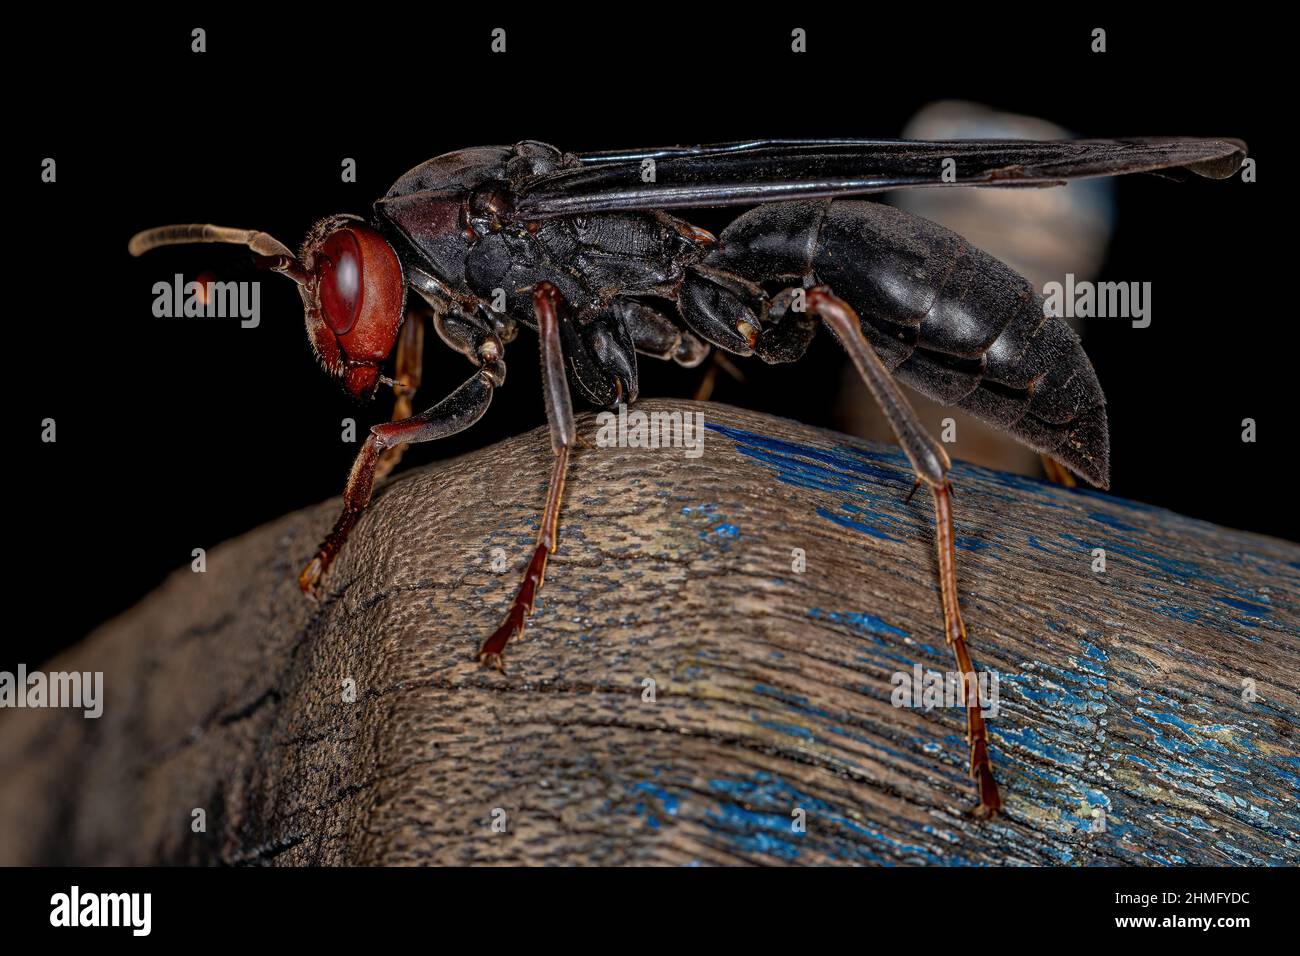 Adult Umbrella Paper Wasp of the Genus Polistes Stock Photo